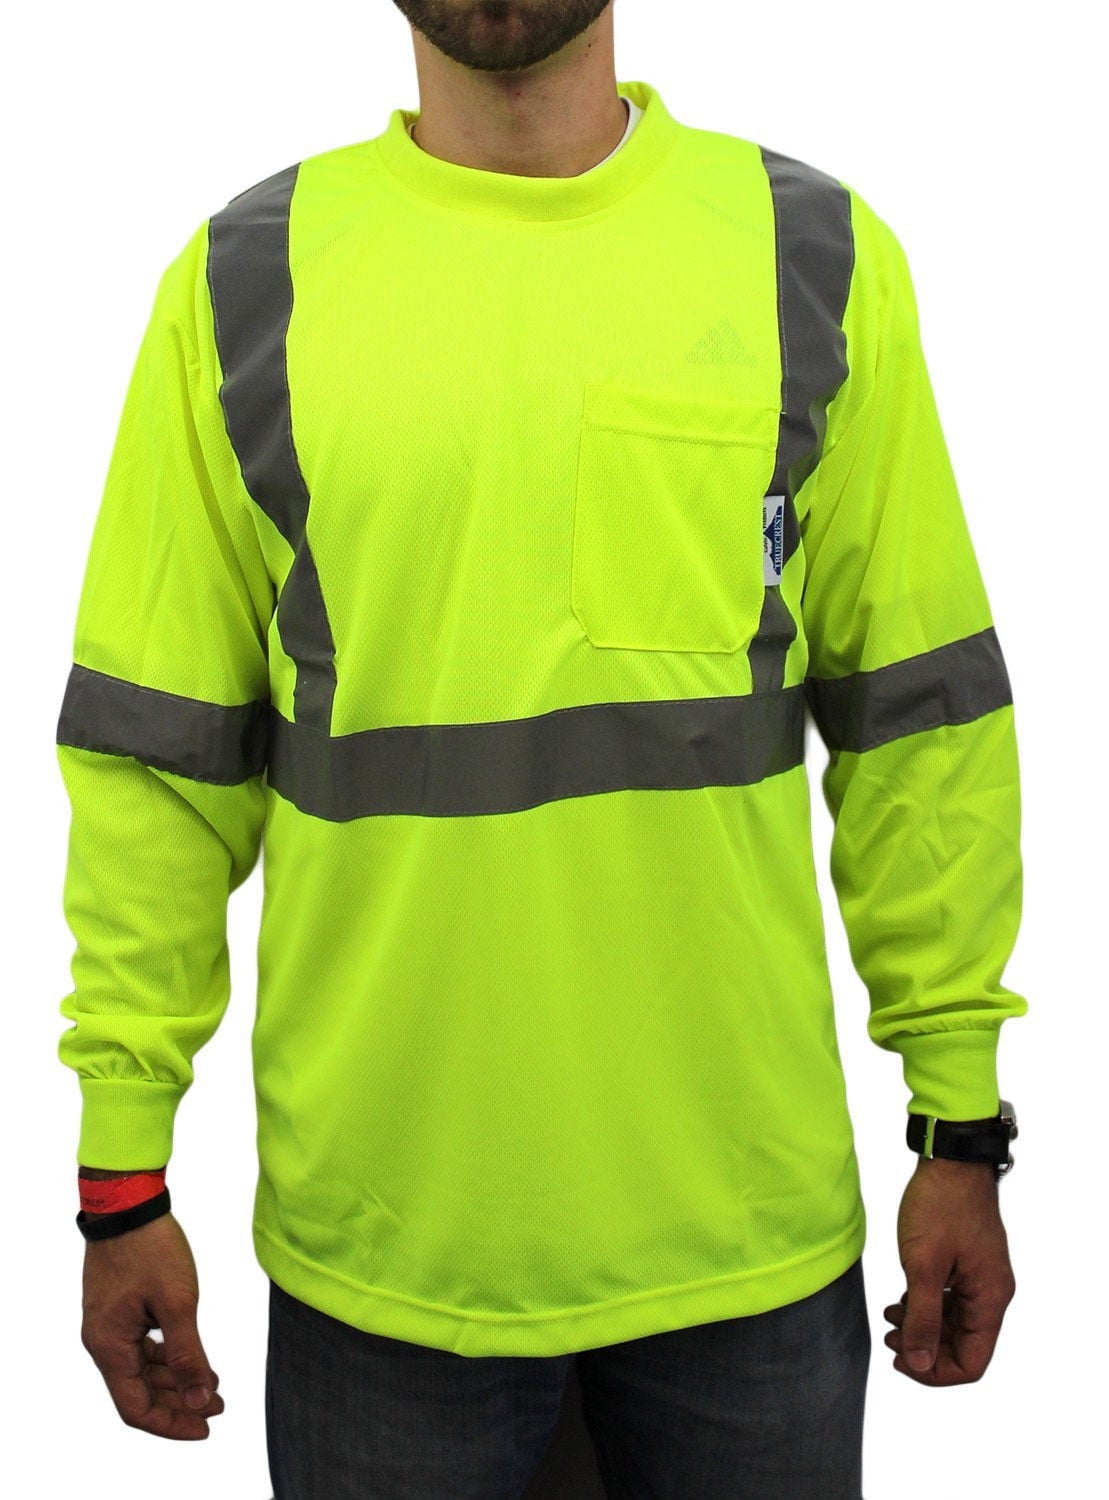 100% Polyester Safety Shirt A-SAFETY Large Hi Viz Short Sleeve Class 2 Max-Dri Moisture Wicking T Shirt Yellow 